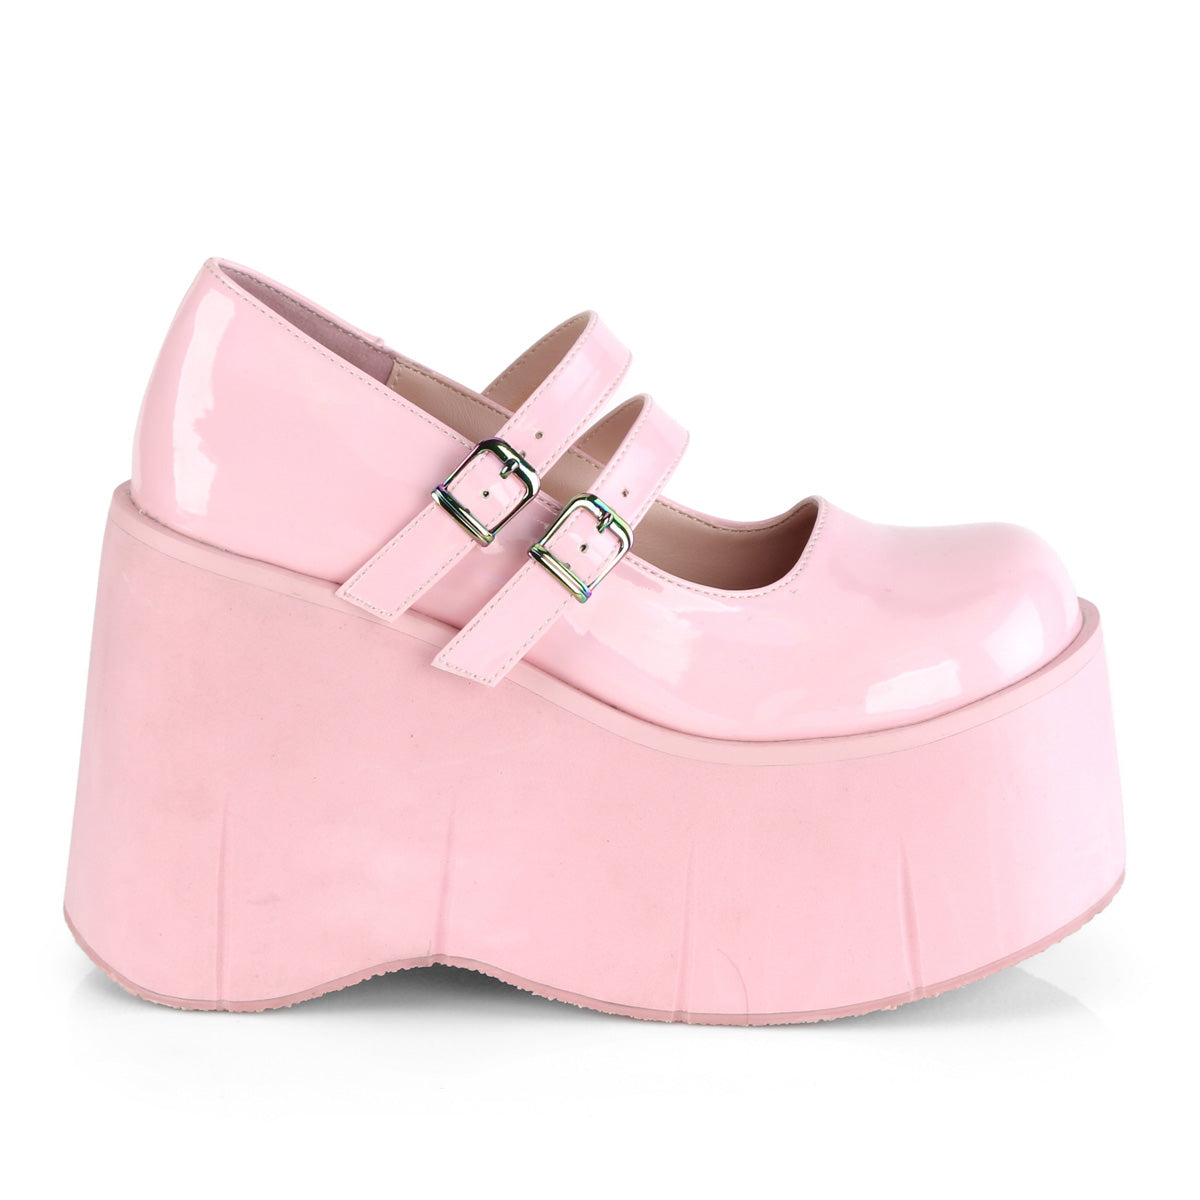 KERA-08 Demonia B Pink Hologram Women's Heels & Platform Shoes [Alternative Footwear]